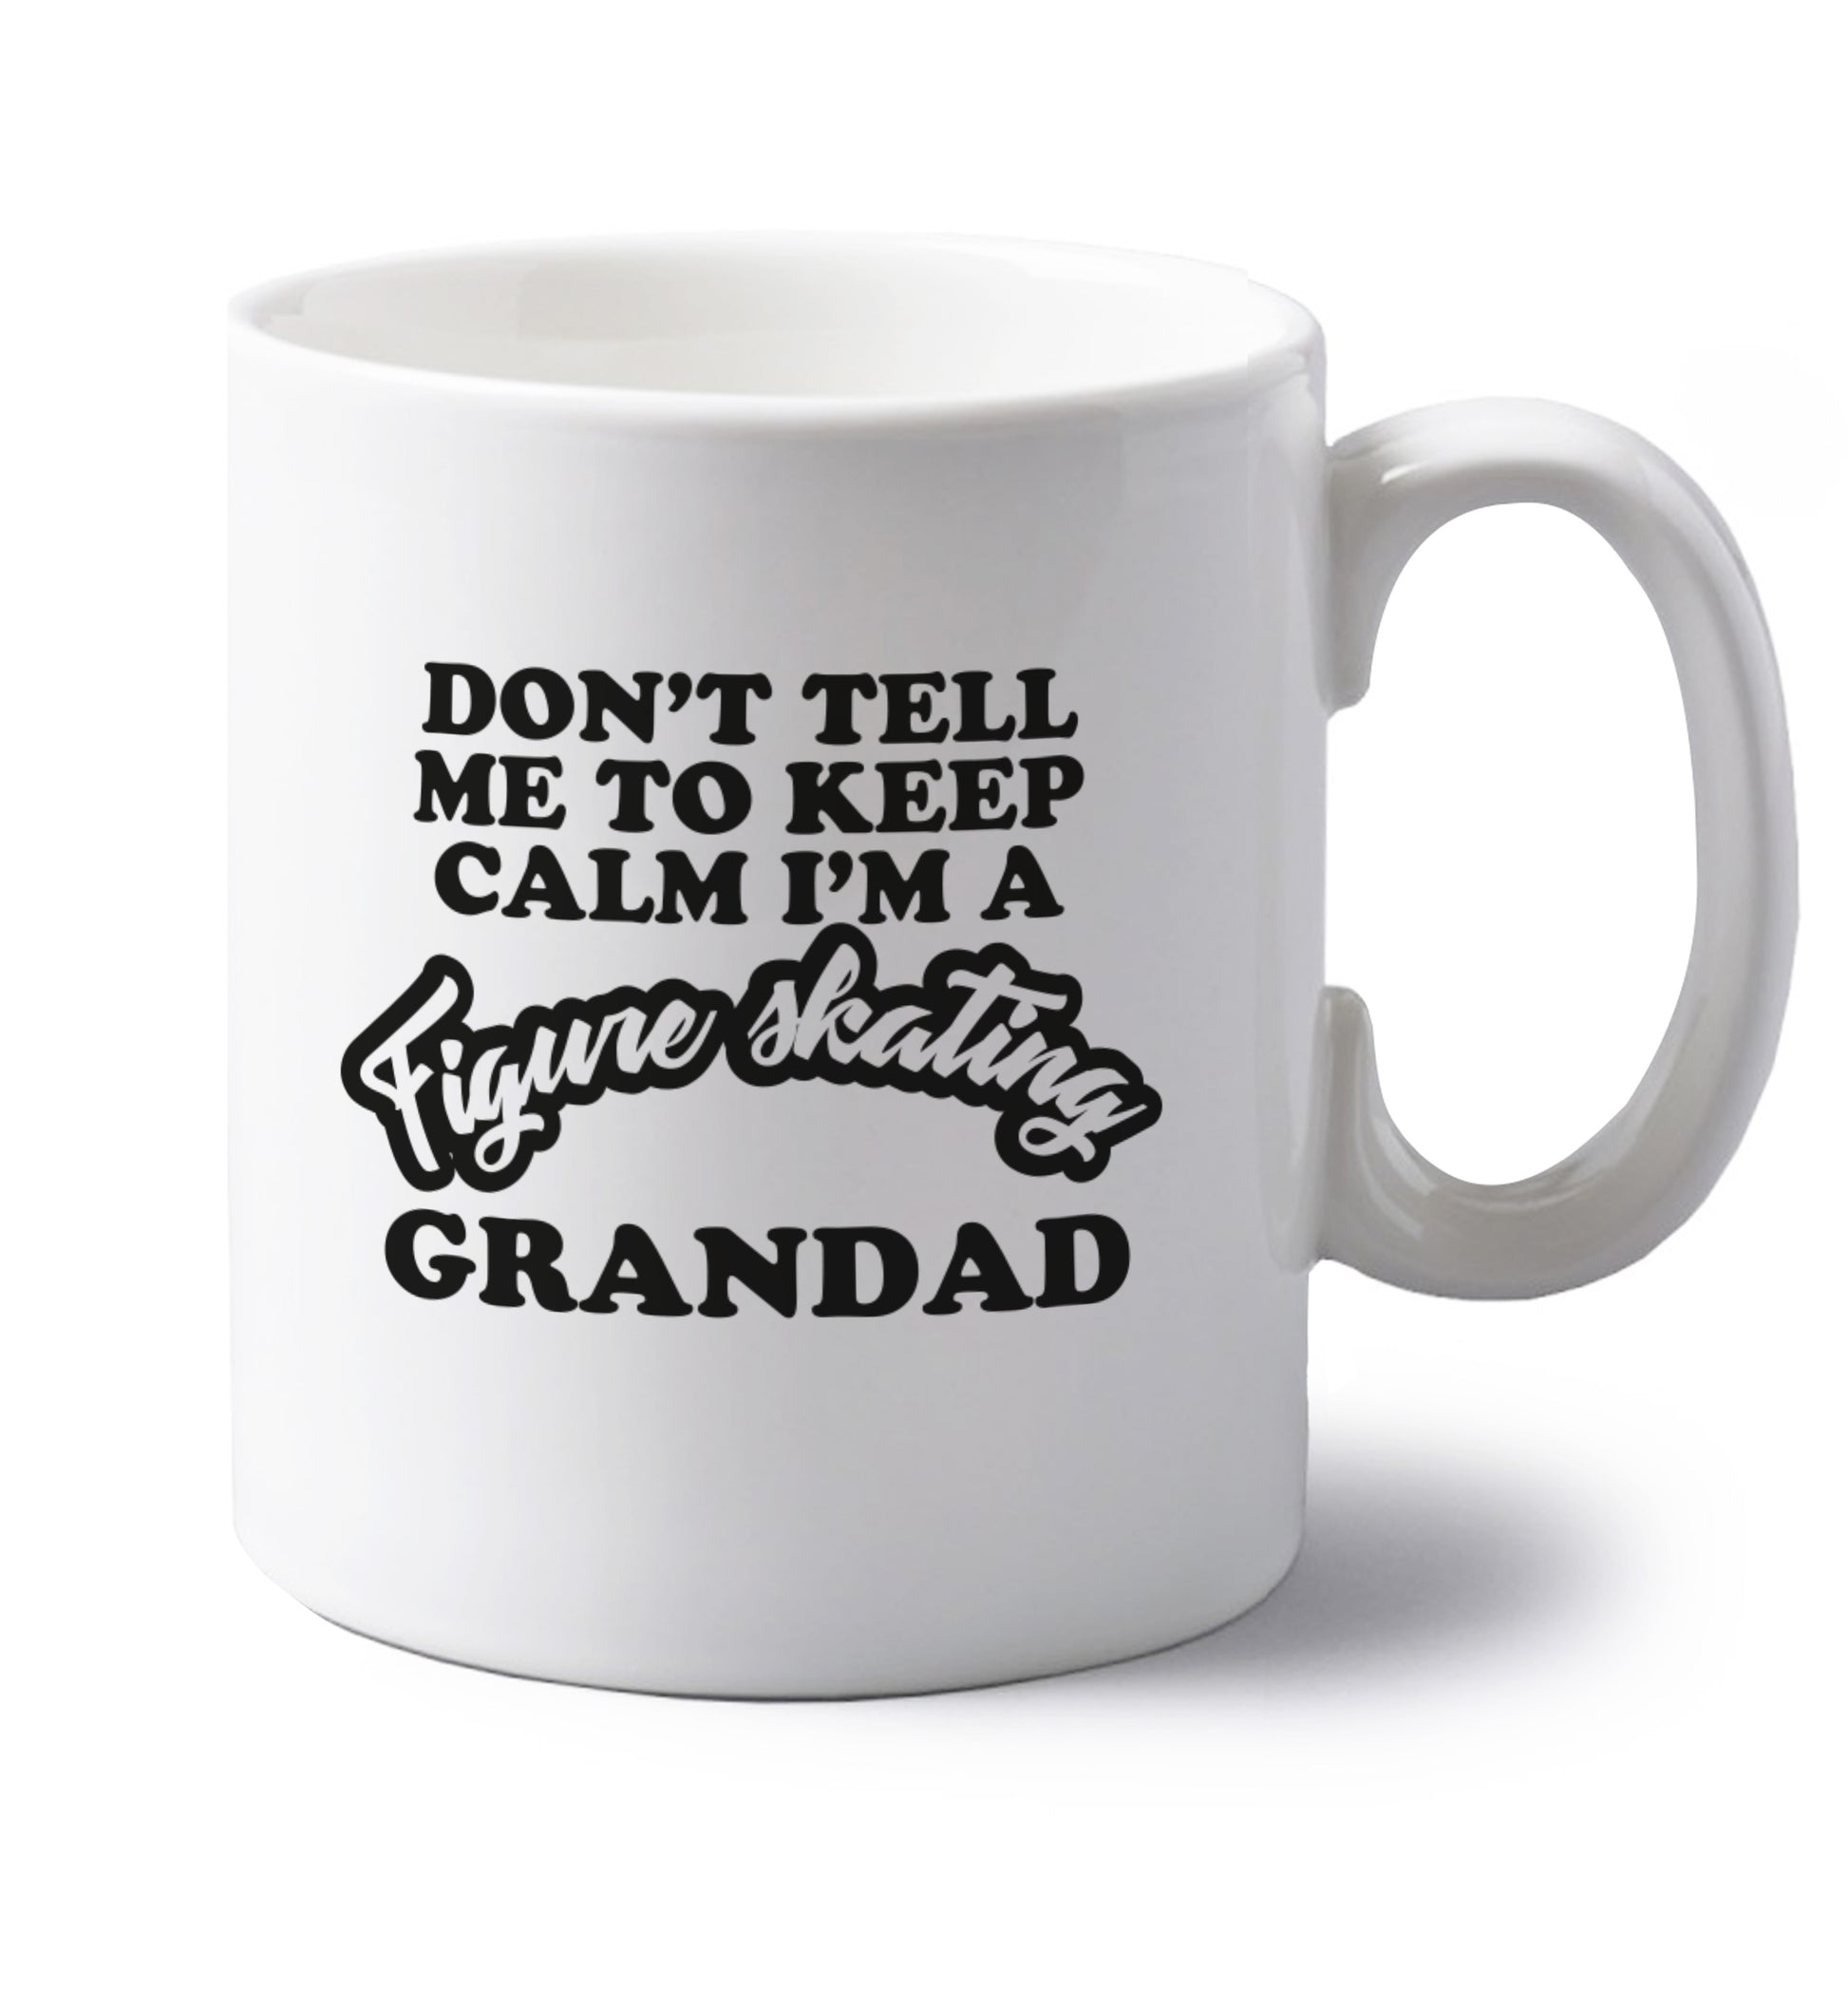 Don't tell me to keep calm I'm a figure skating grandad left handed white ceramic mug 